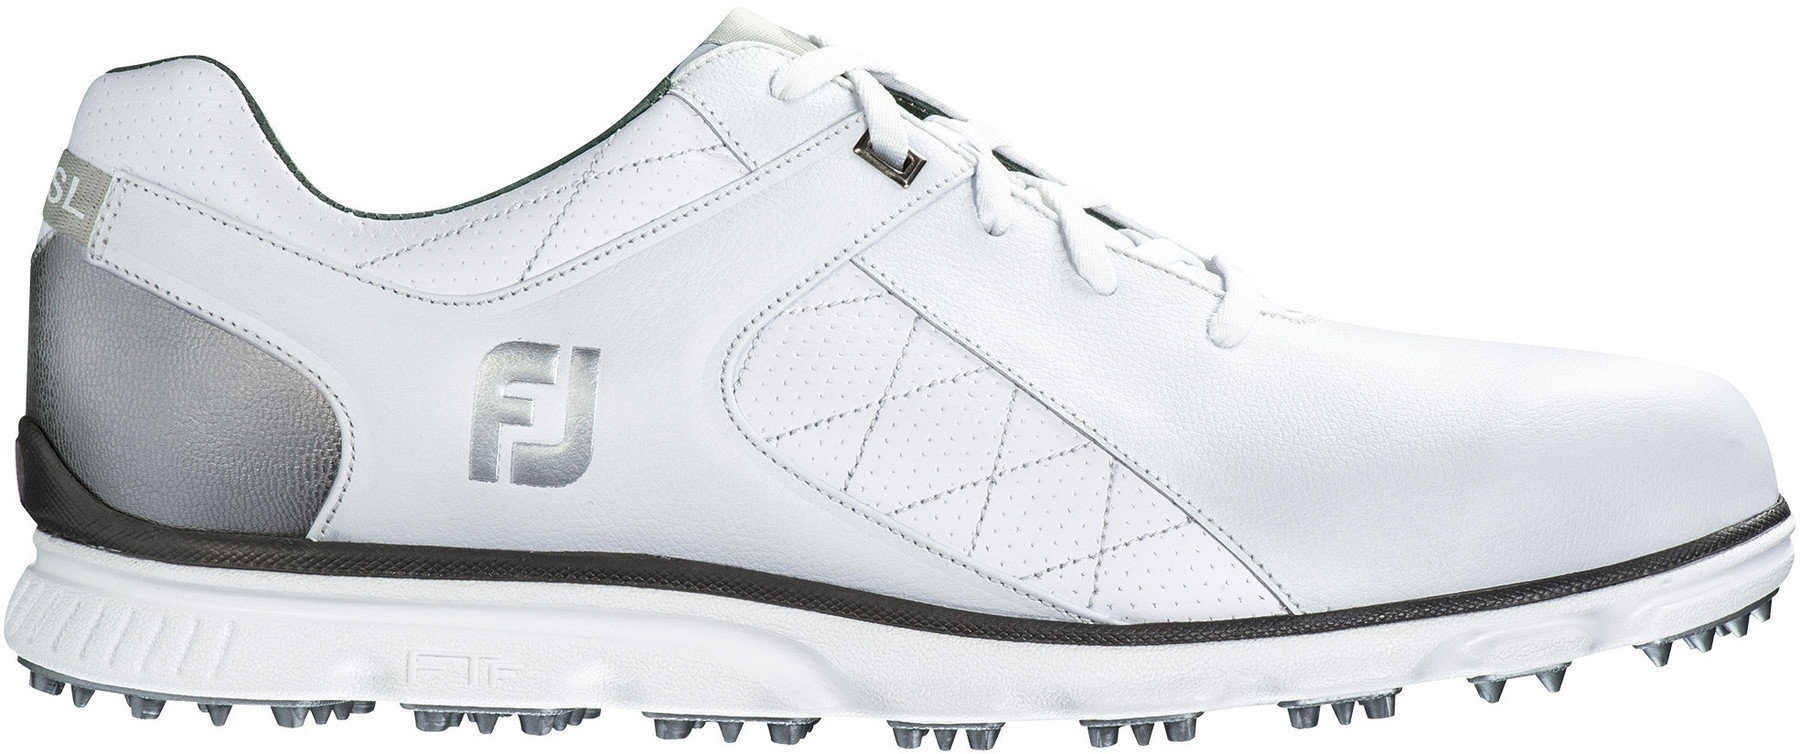 Calzado de golf para hombres Footjoy Pro SL Mens Golf Shoes White/Silver US 9